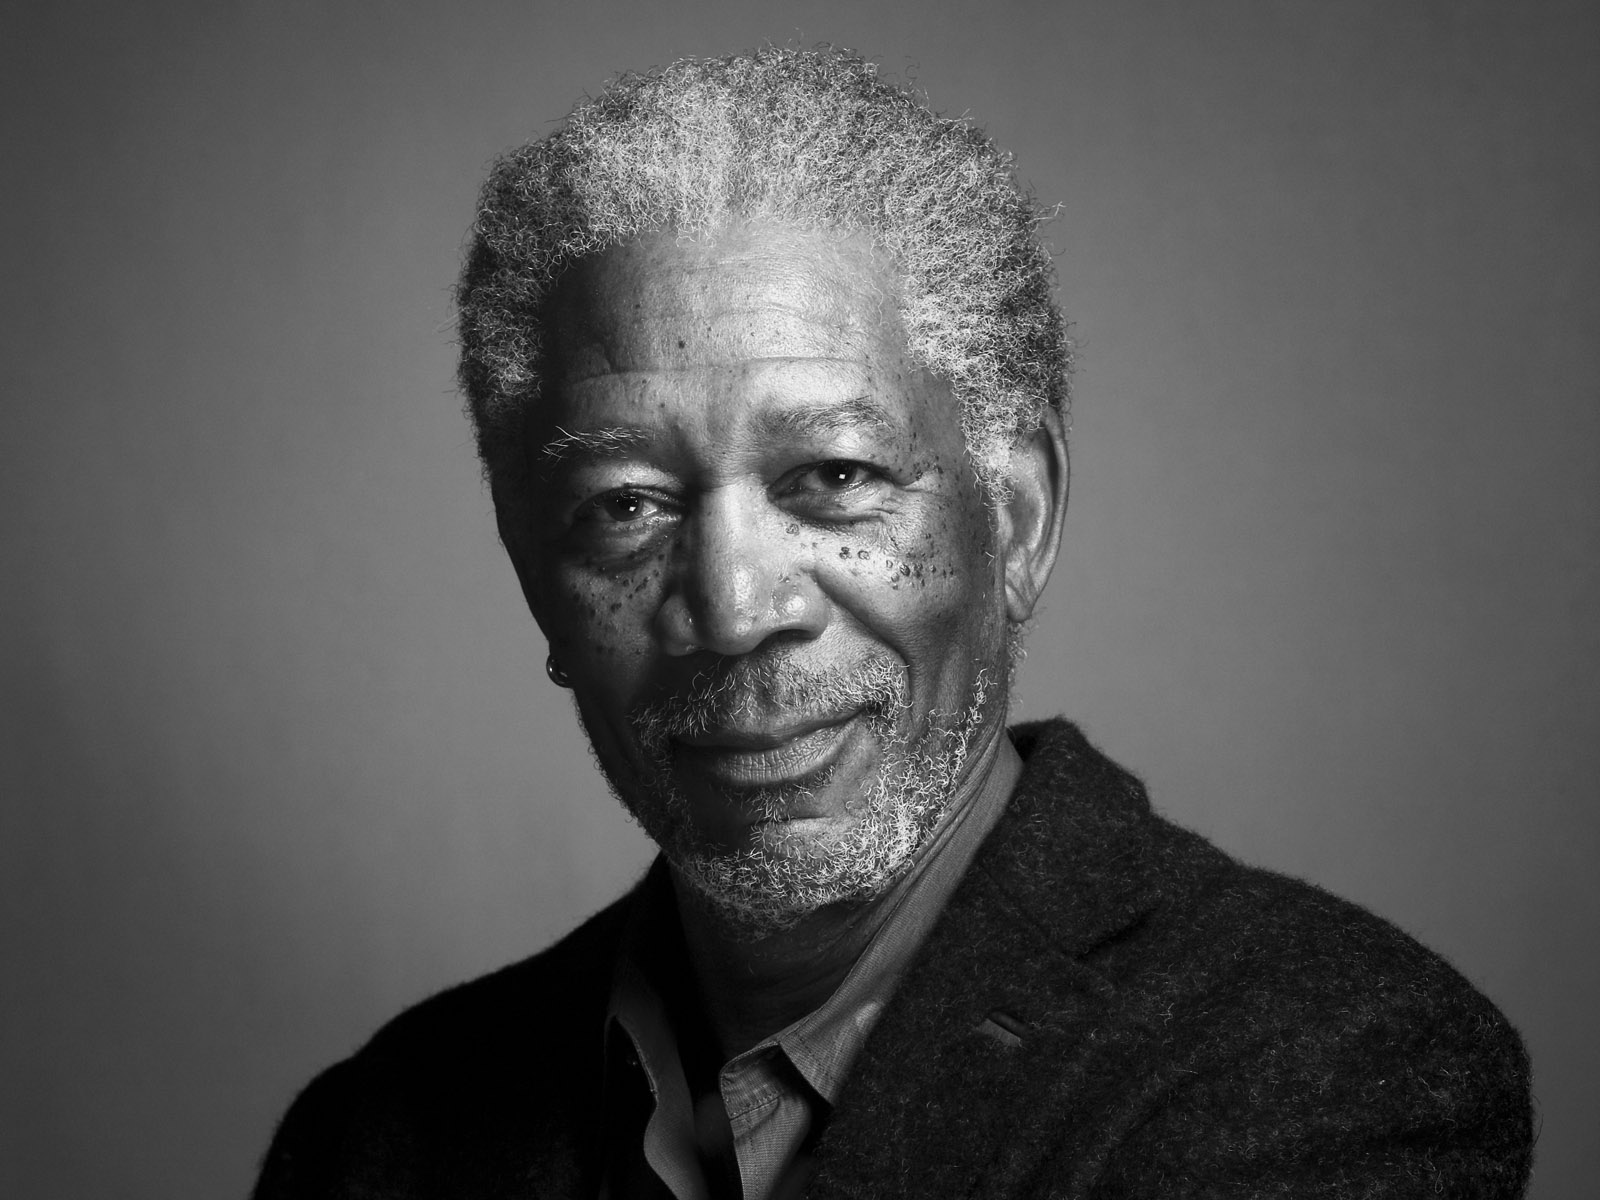 Celebrity Morgan Freeman HD Wallpaper | Background Image